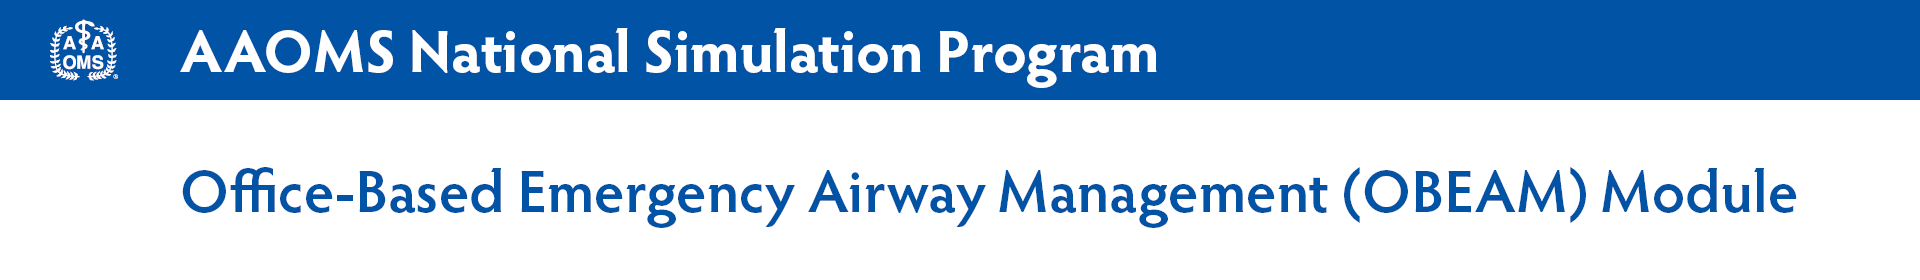 Office Based Emergency Airway Management (OBEAM)